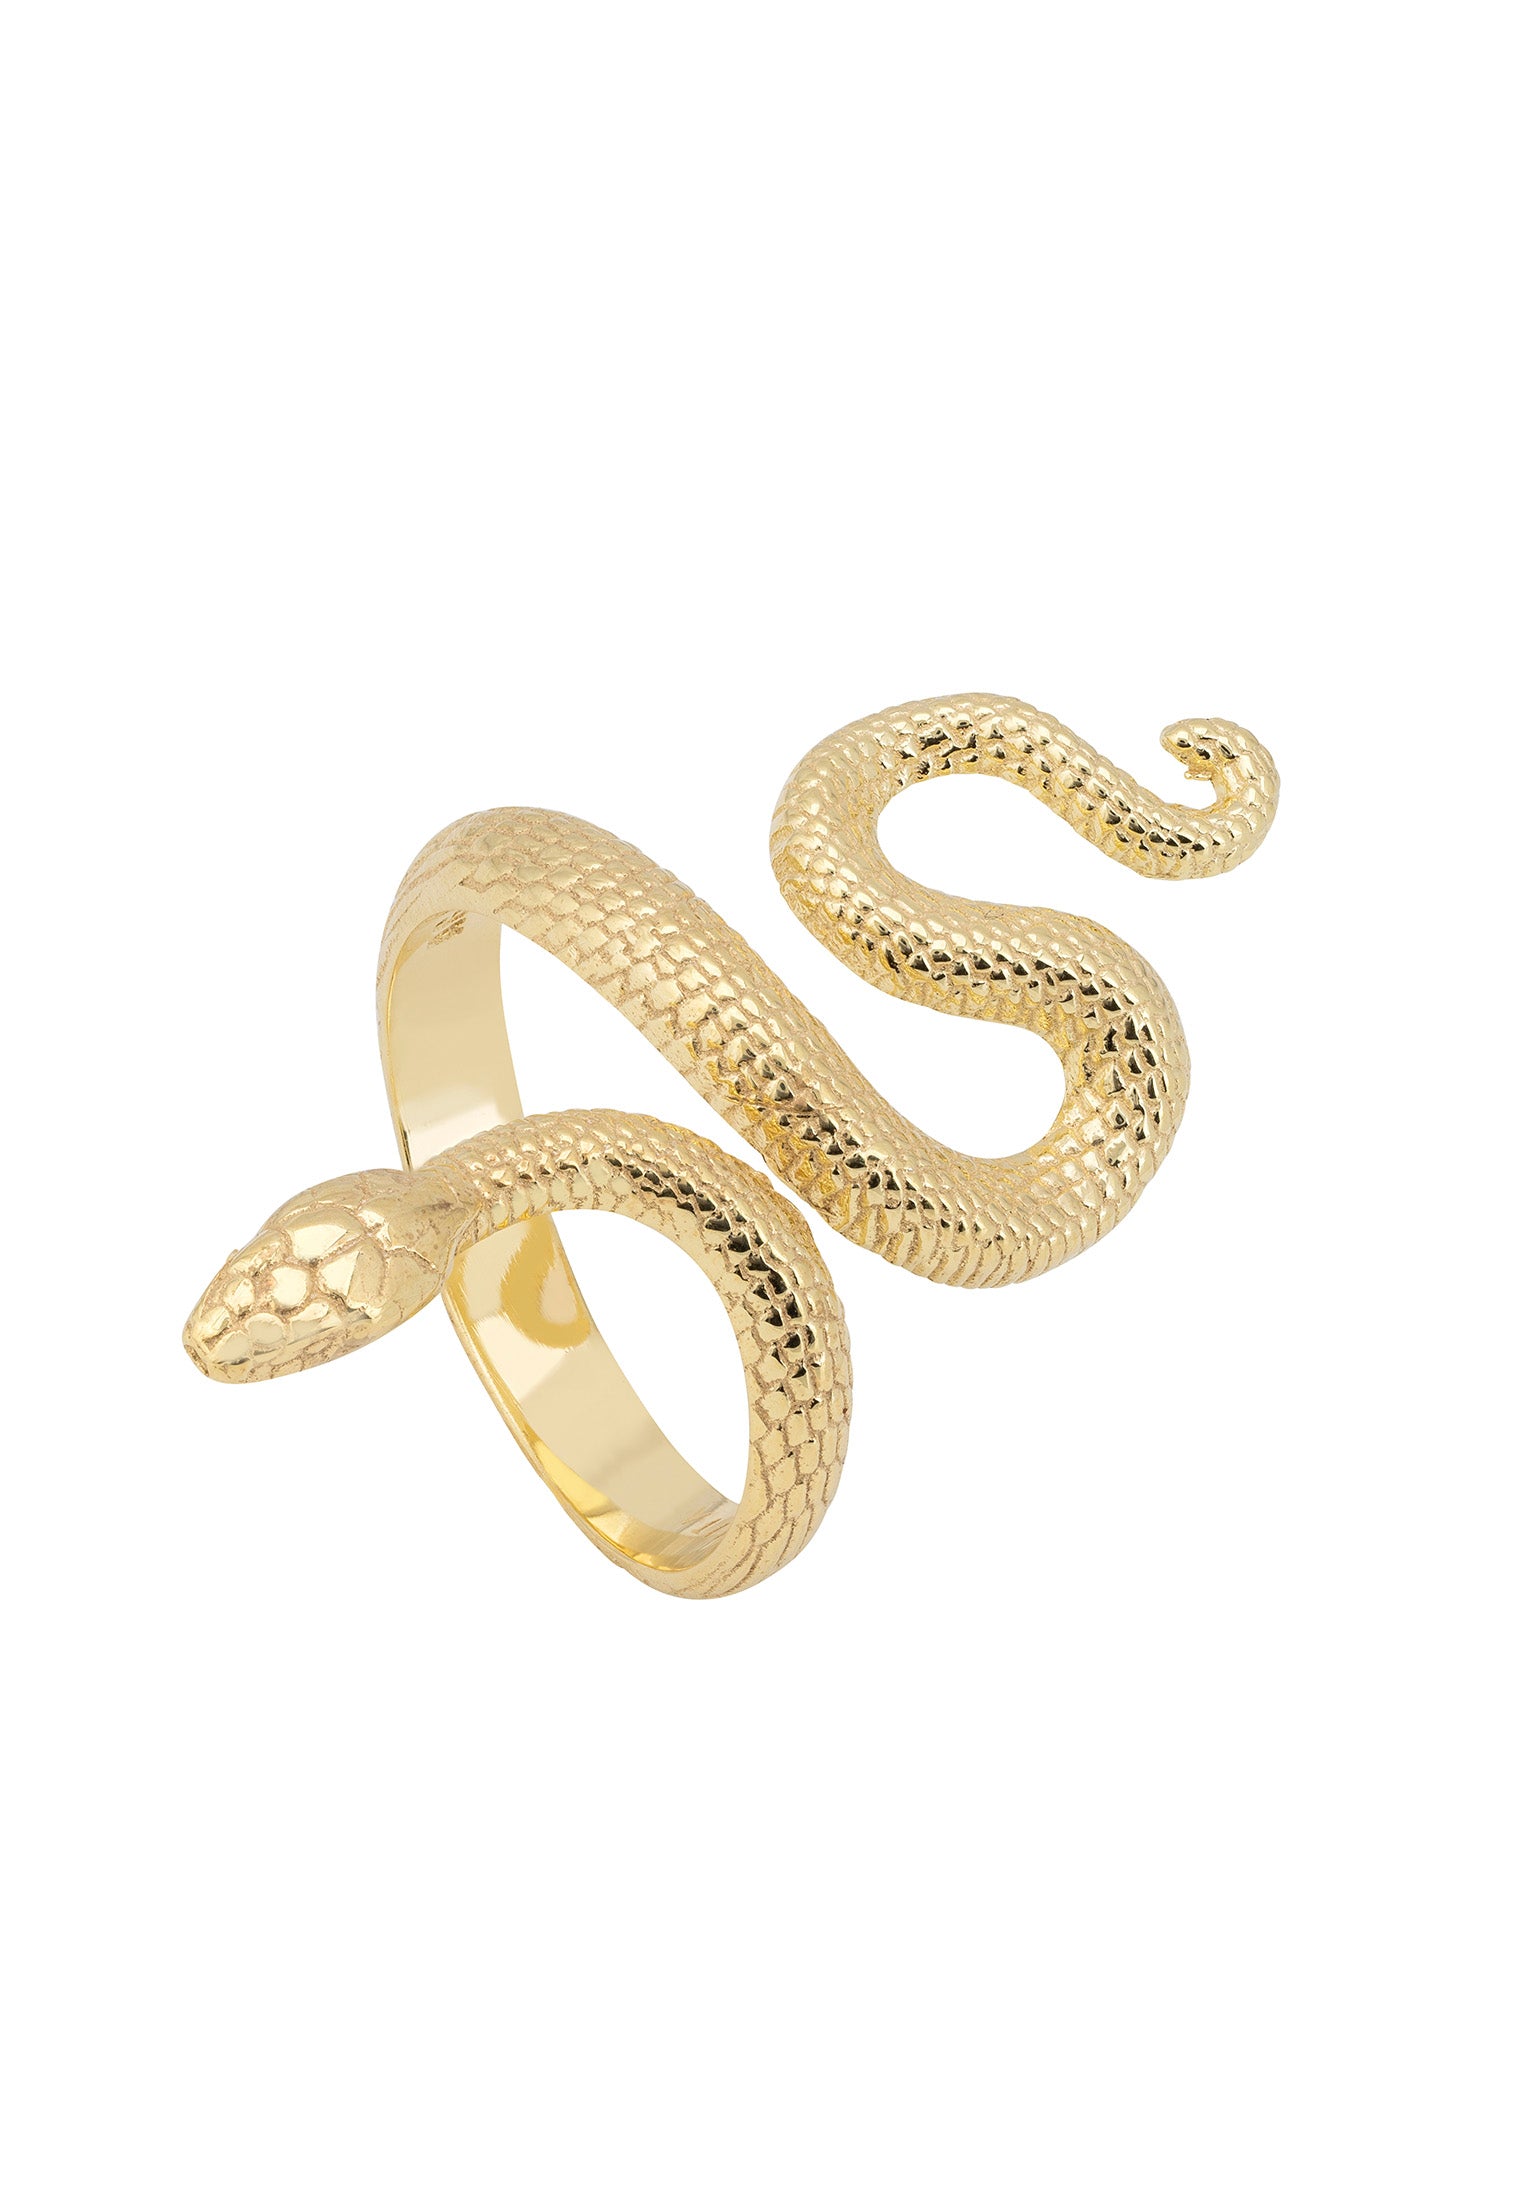 Coiled Cobra Snake Cocktail Ring Gold